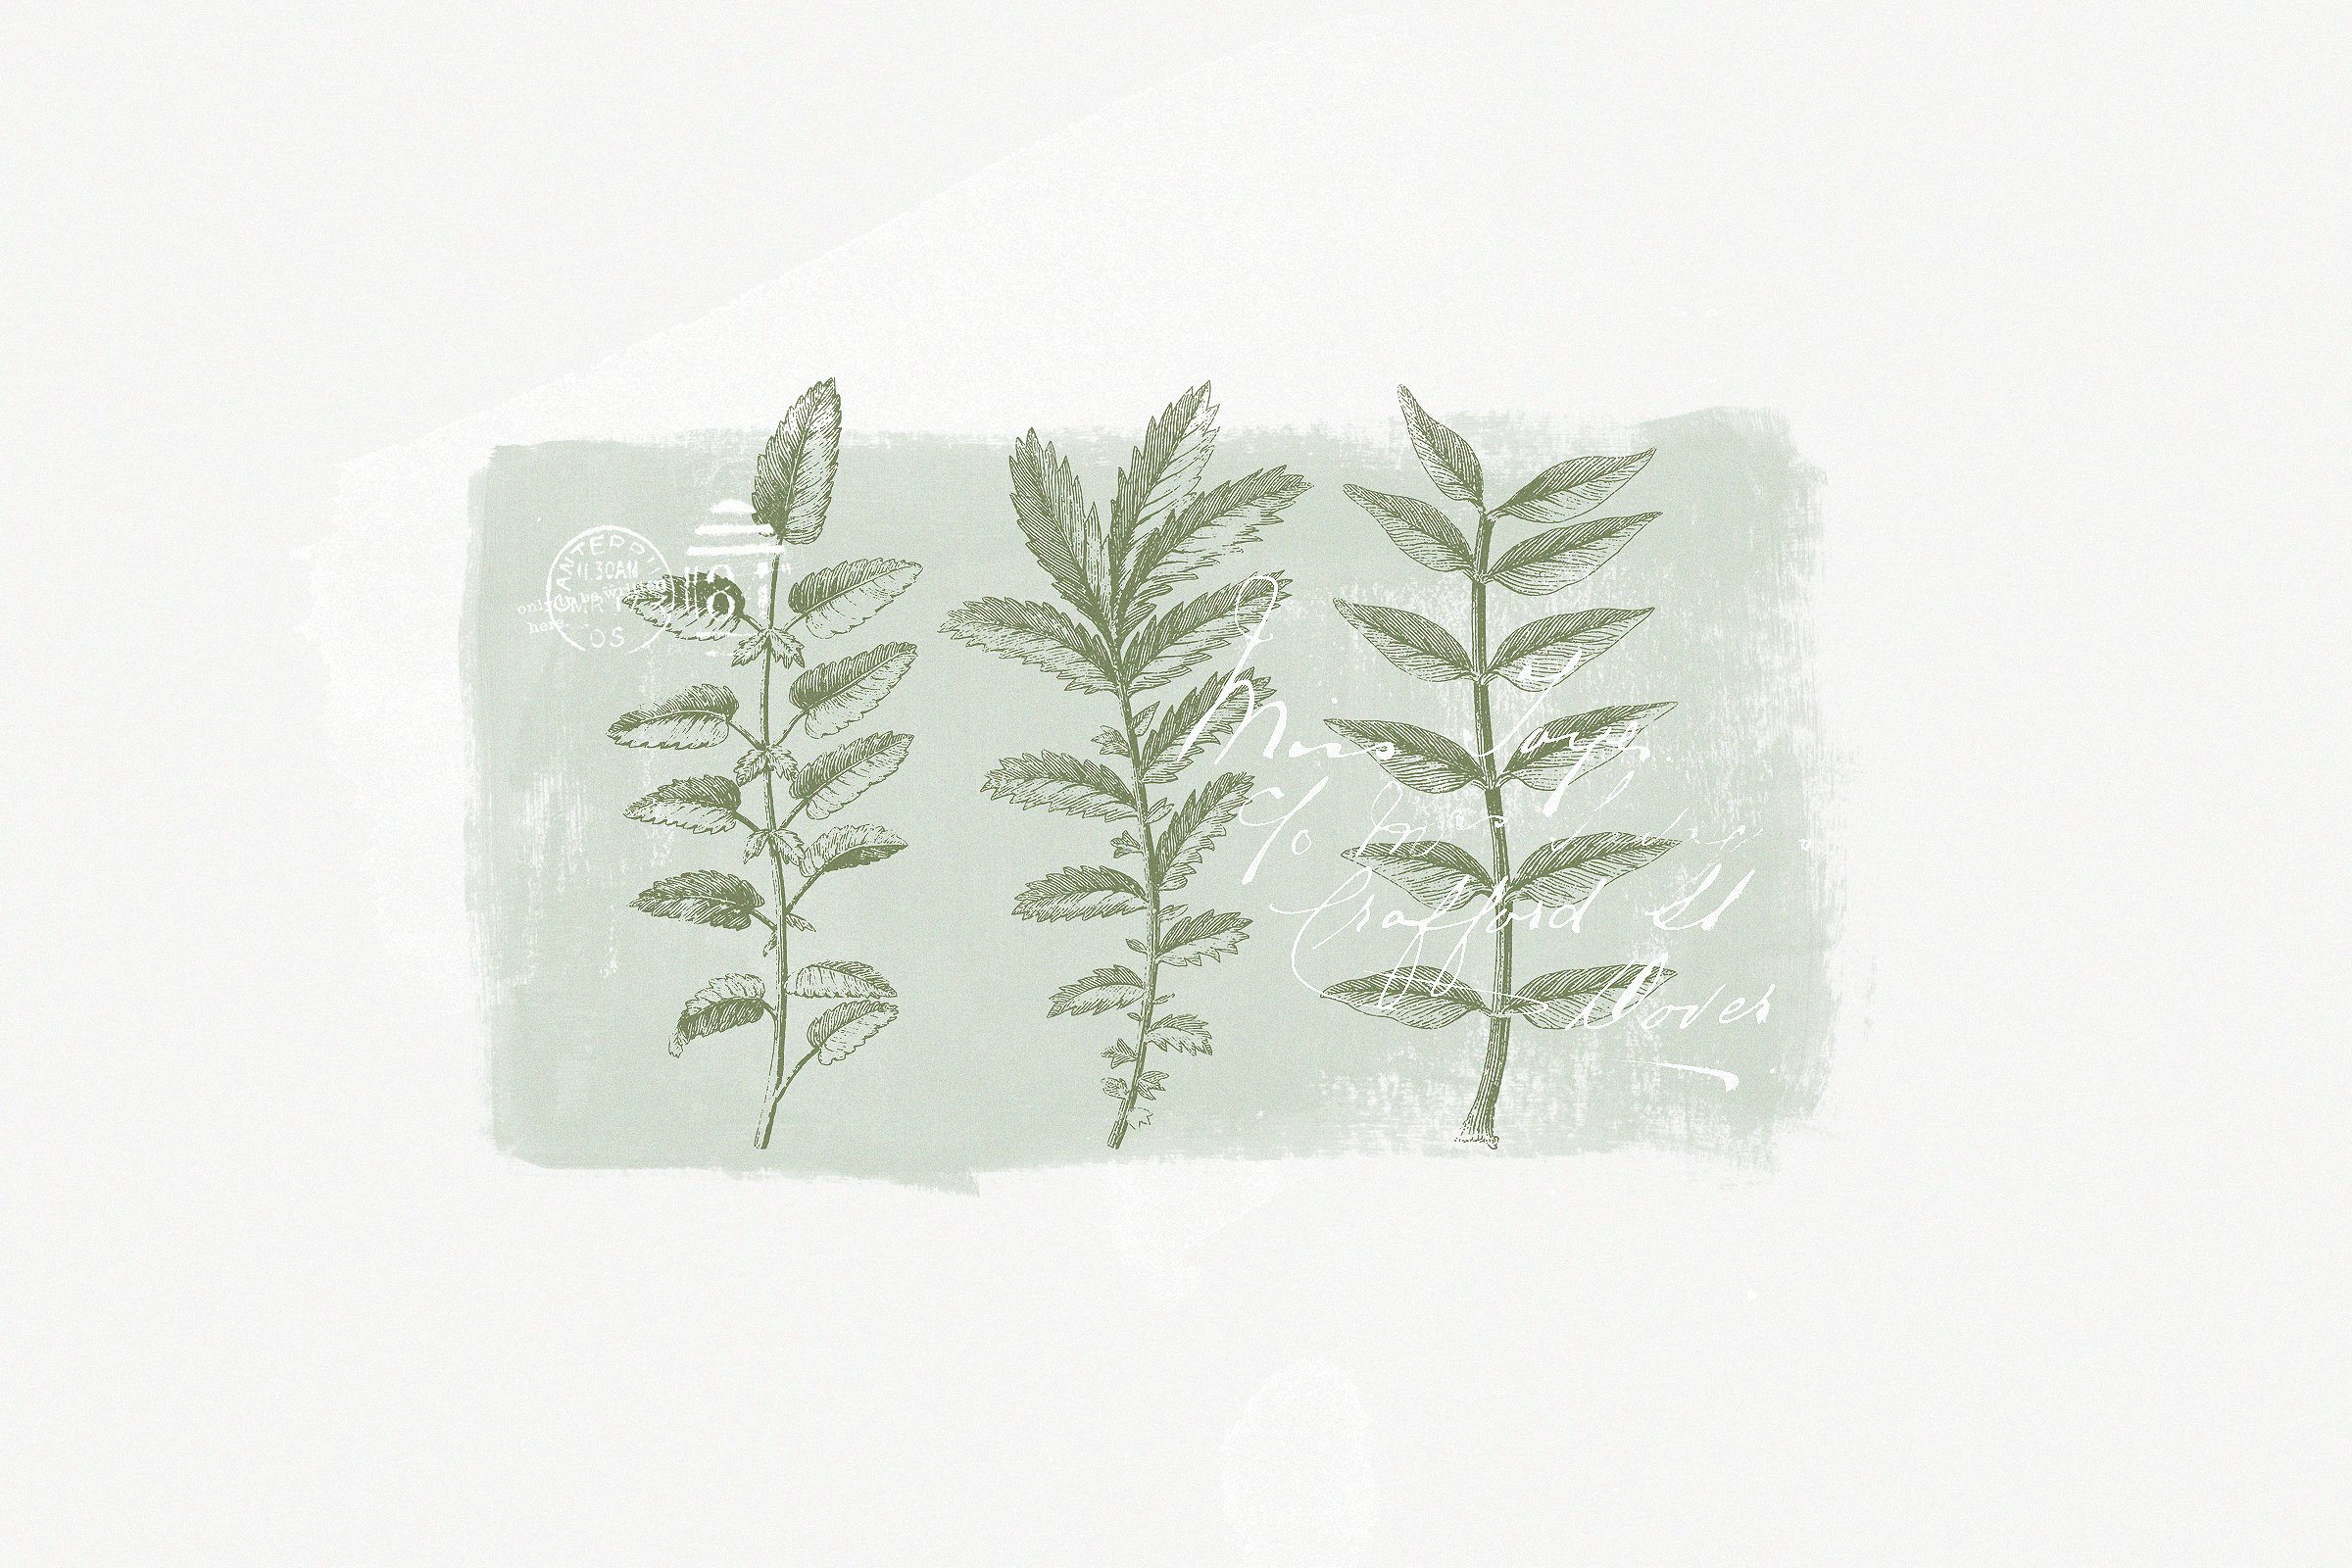 147种古董书籍植物插画素材合集 147 Botanical Illustrations Pack插图1